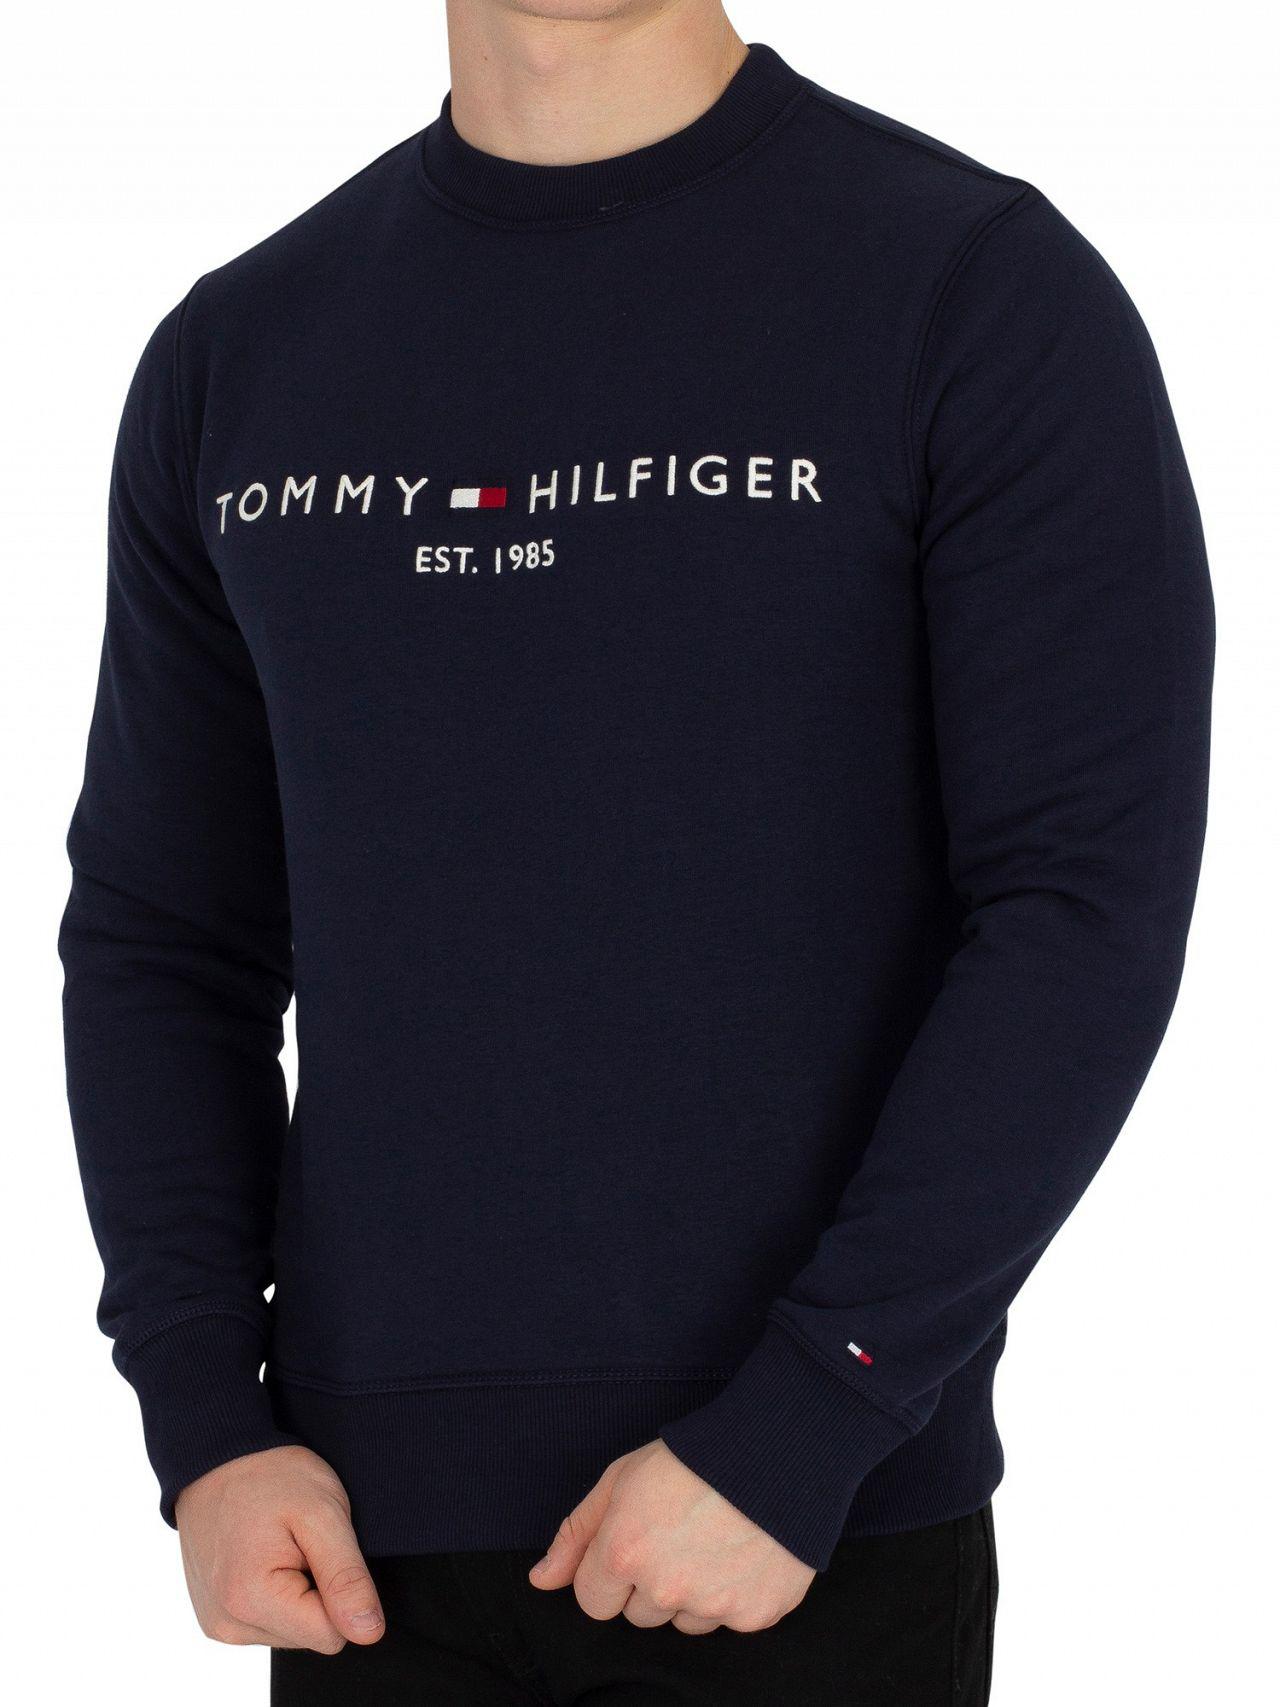 Tommy Hilfiger Logo Sweatshirt Black Top Sellers, 53% OFF | empow-her.com